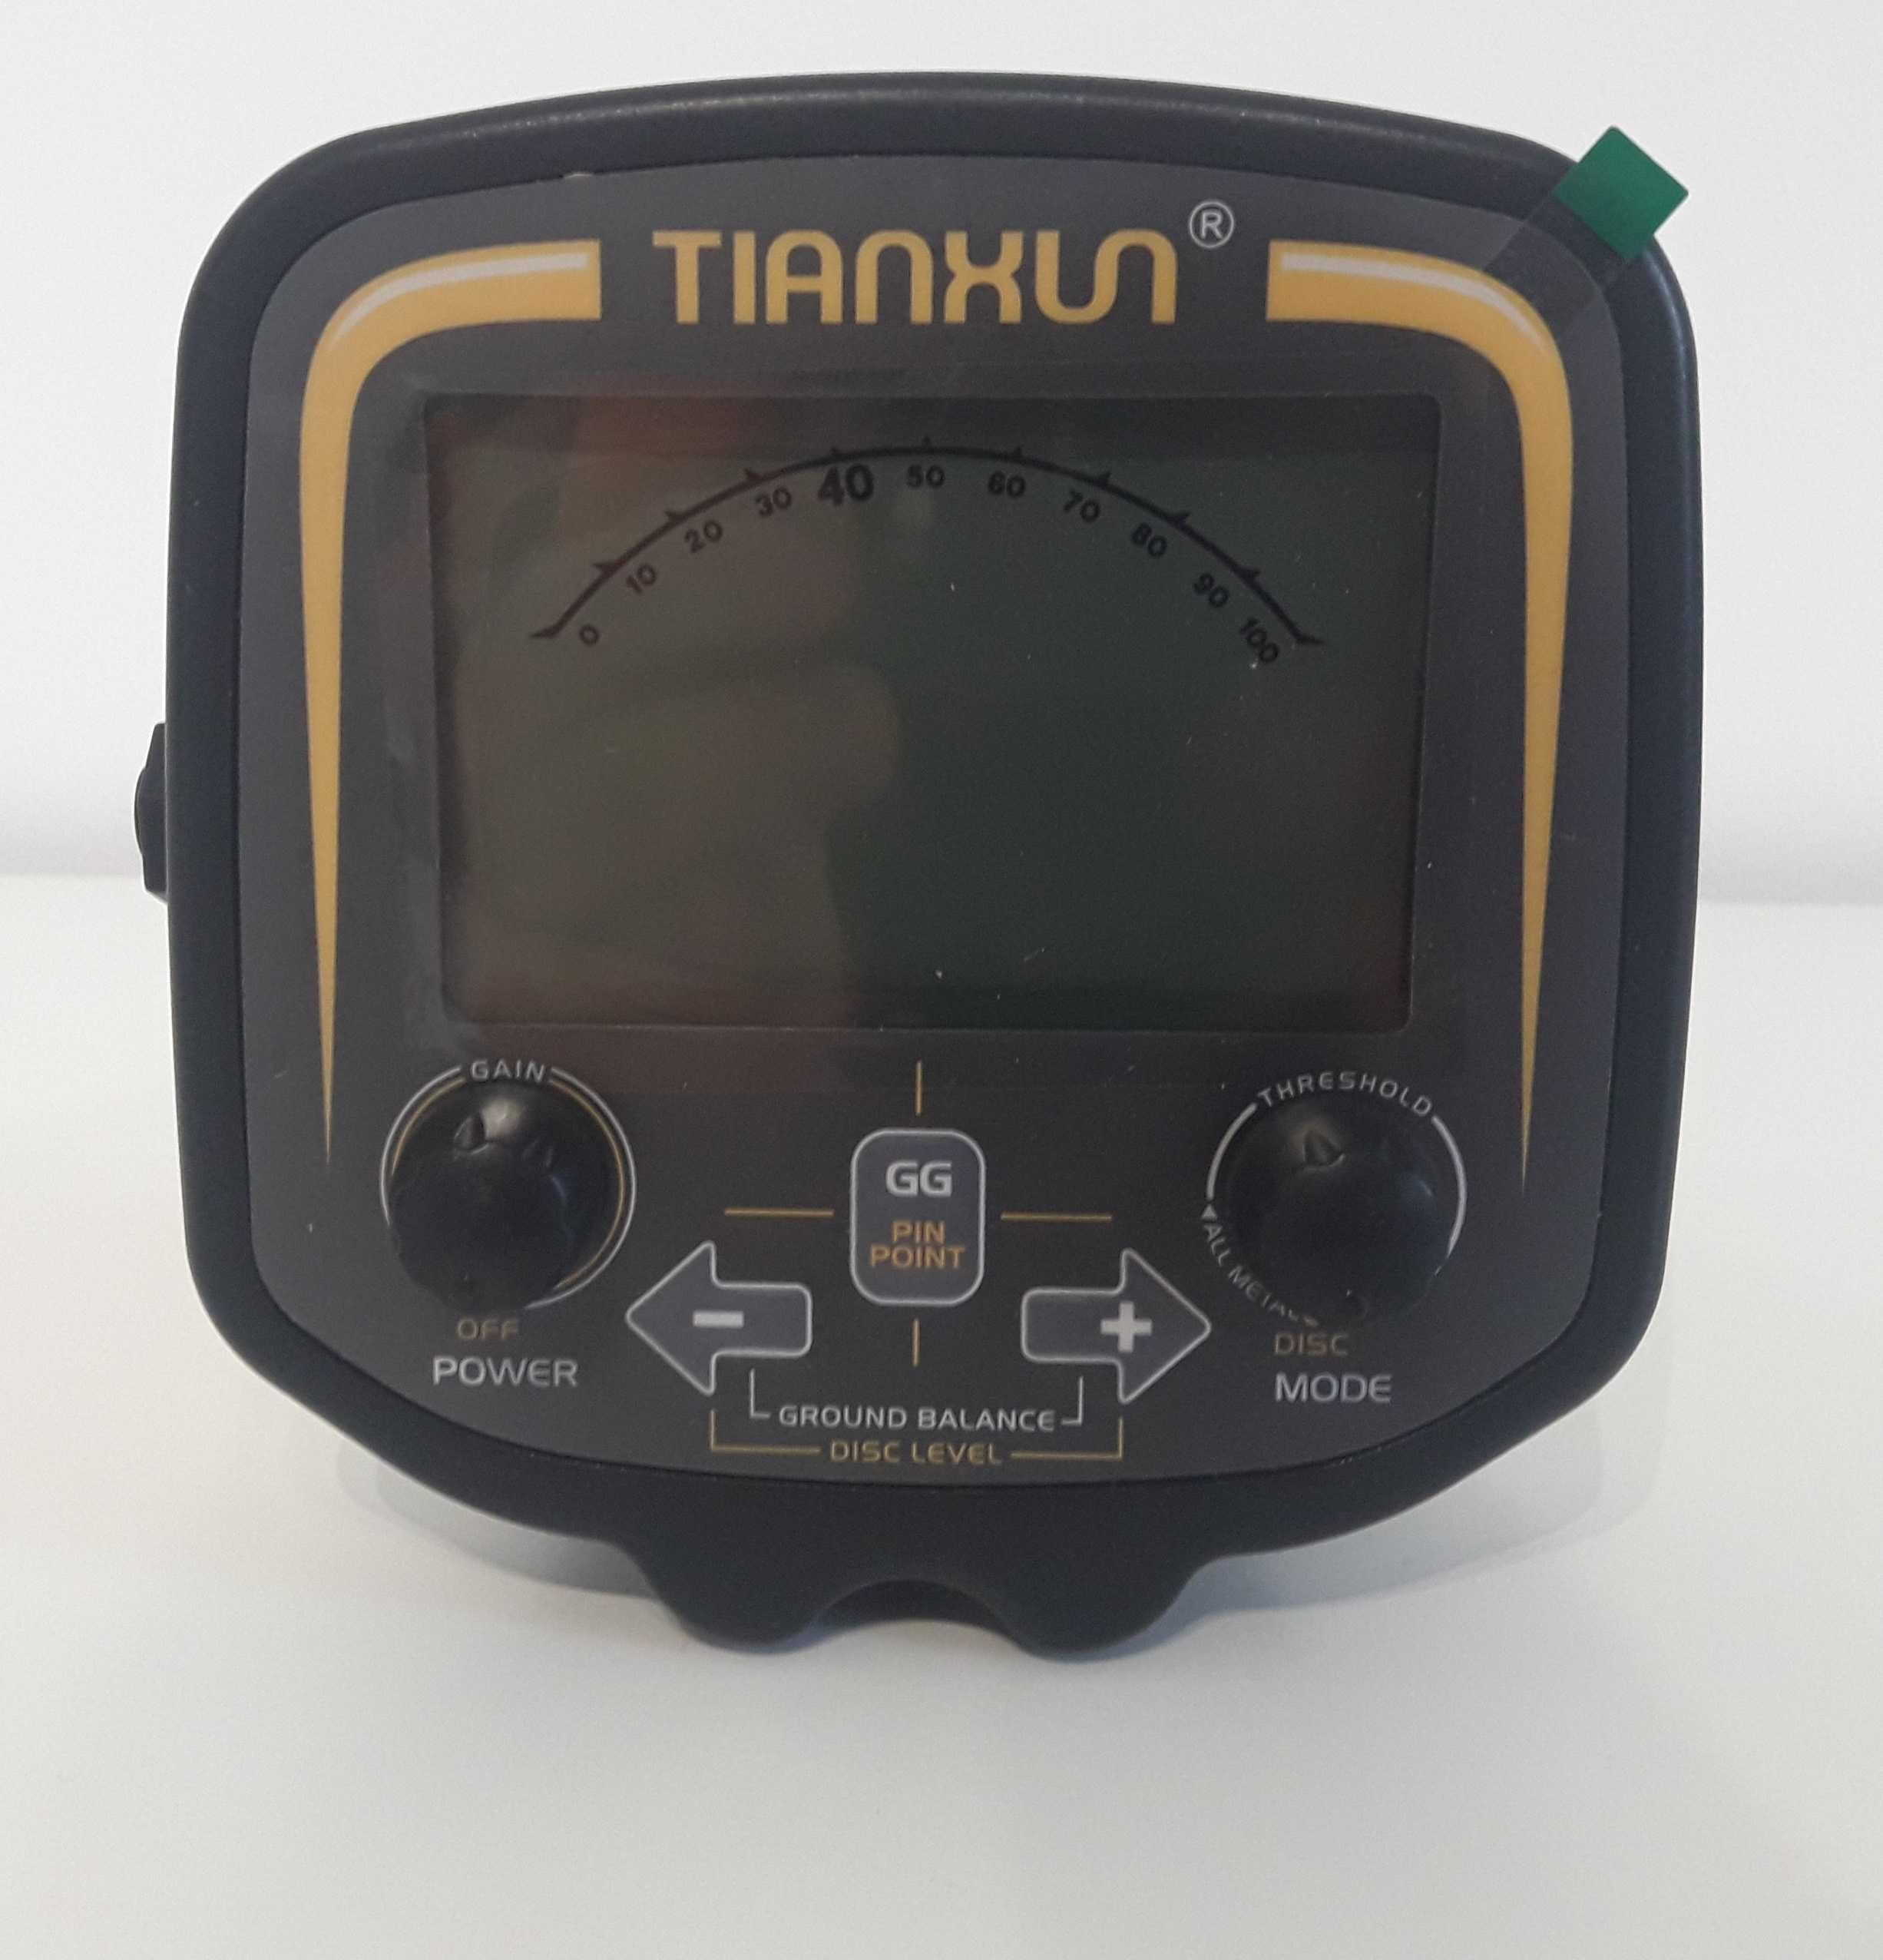 TIANXUN TX-850 wykrywacz tx850 pinpointer garrett Detektor